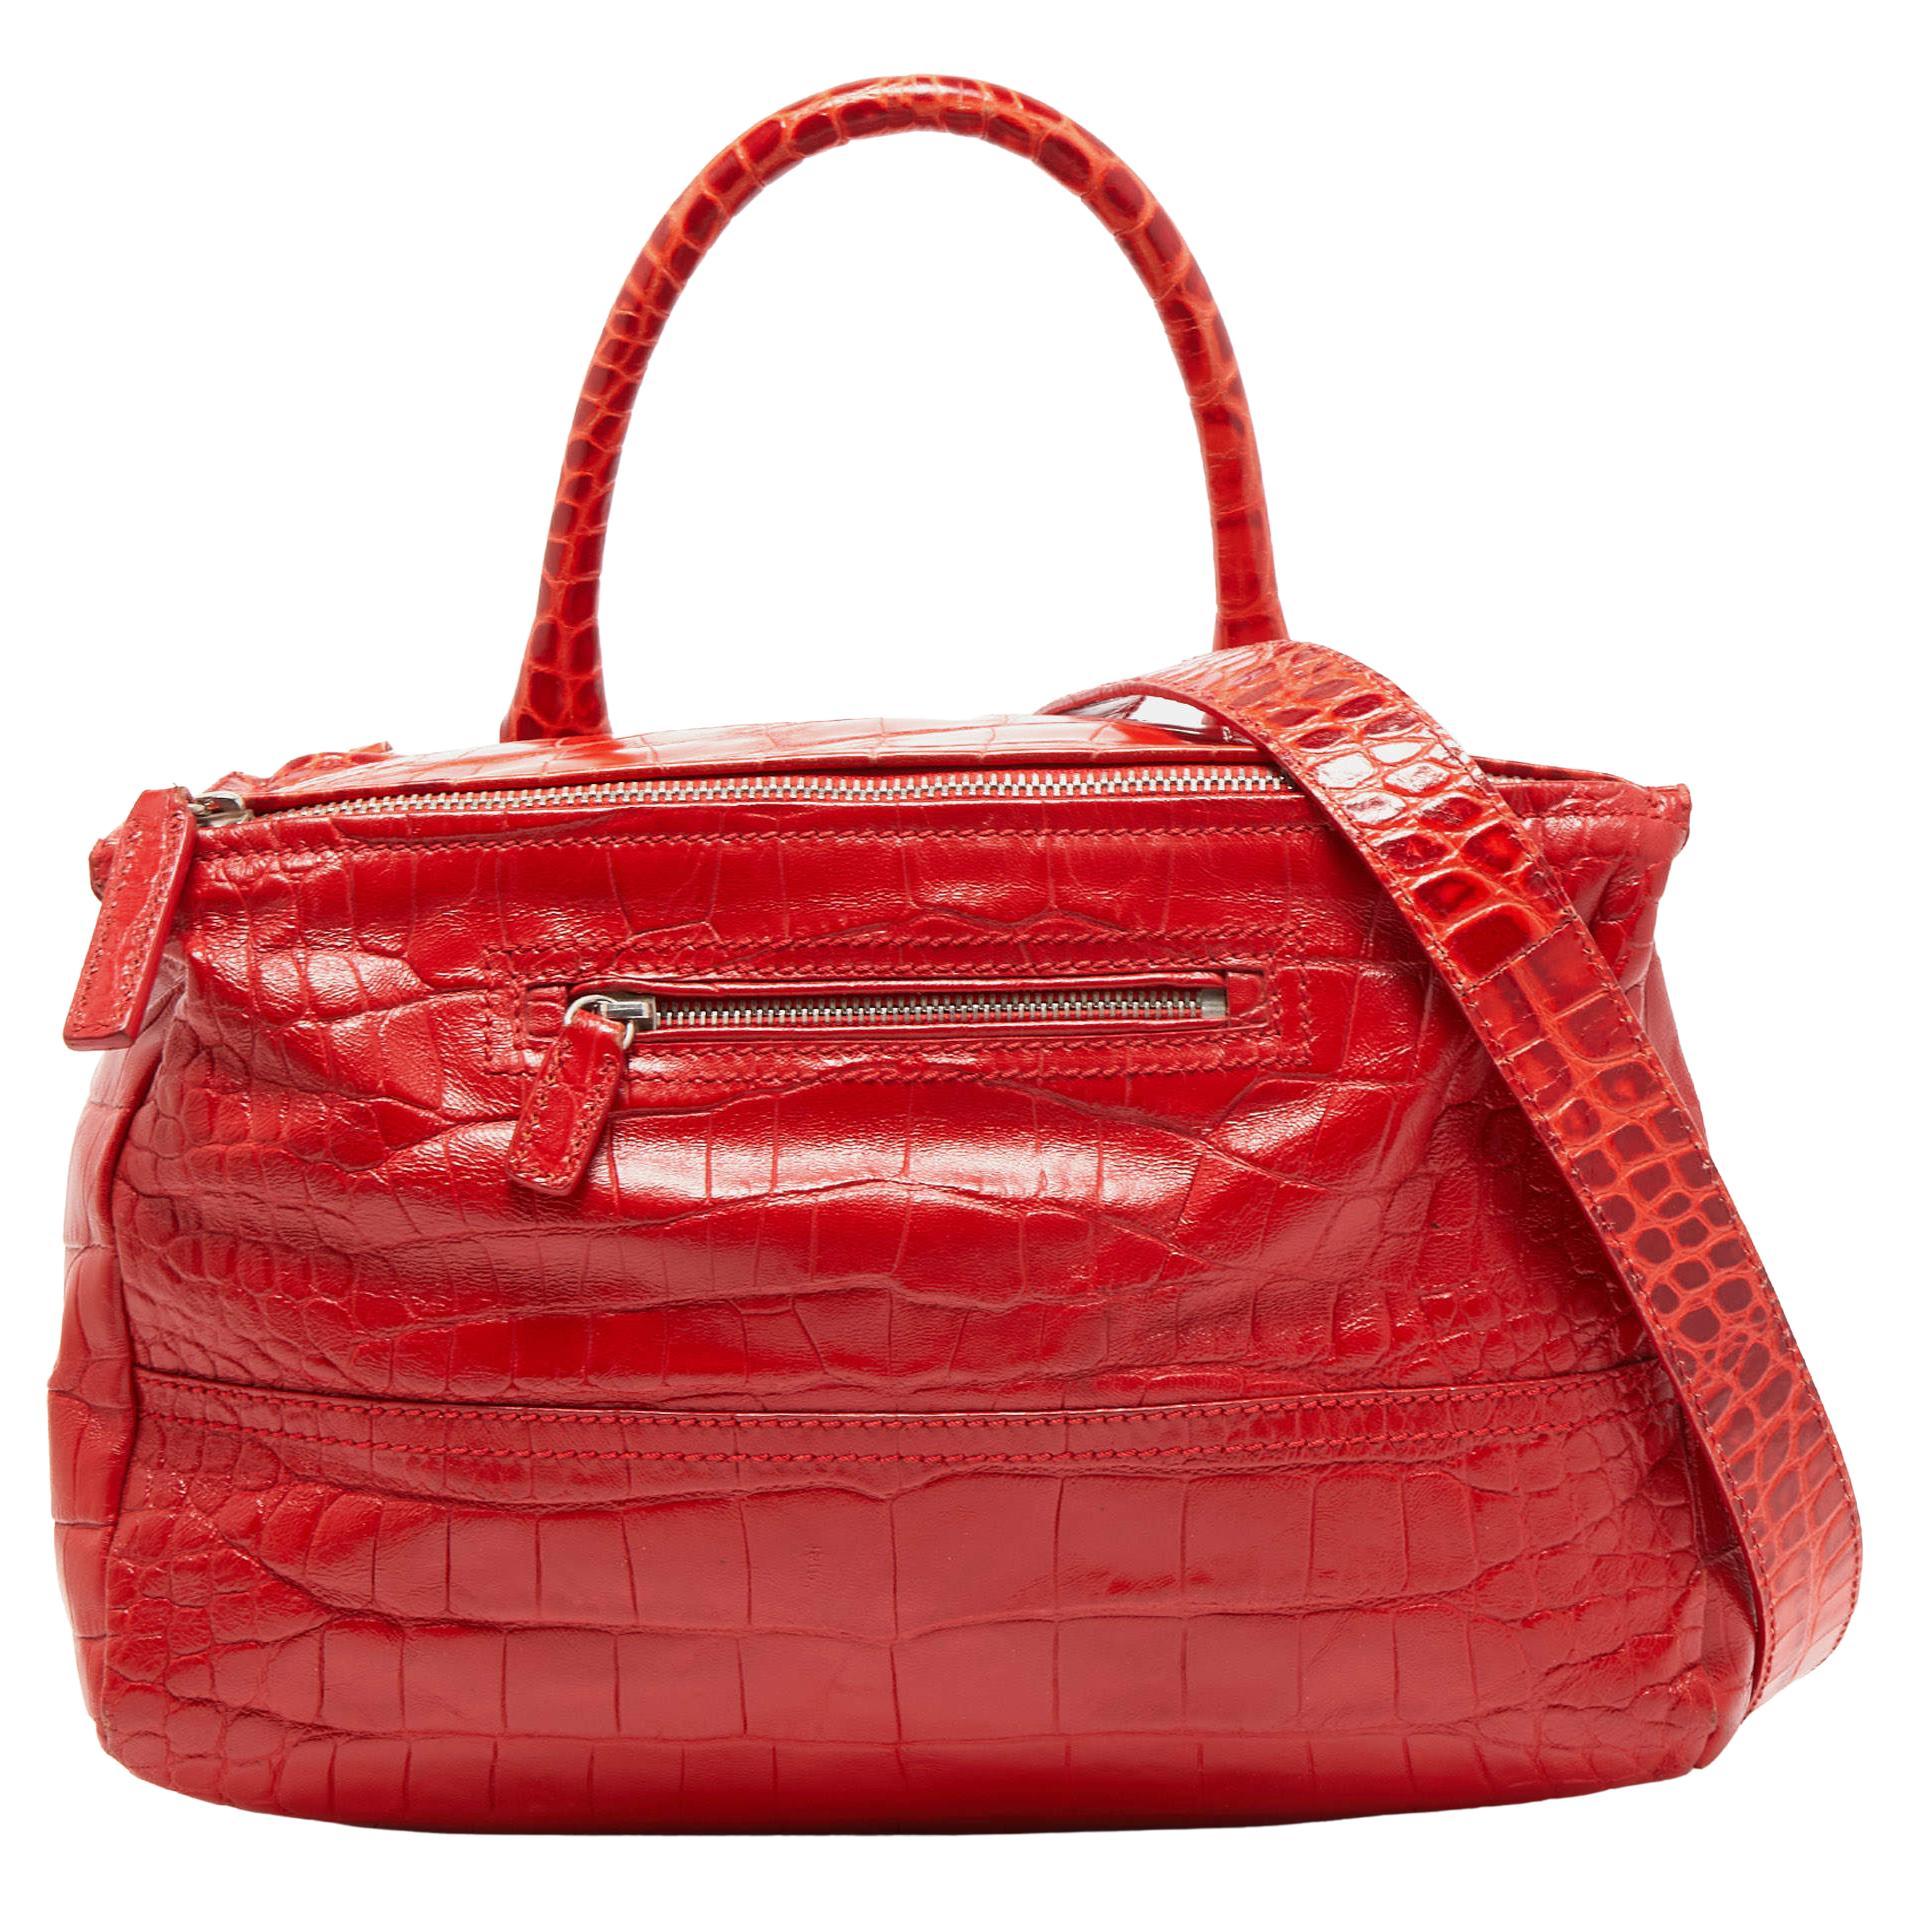 Givenchy Two Tone Red Croc Embossed Leather Medium Pandora Shoulder Bag